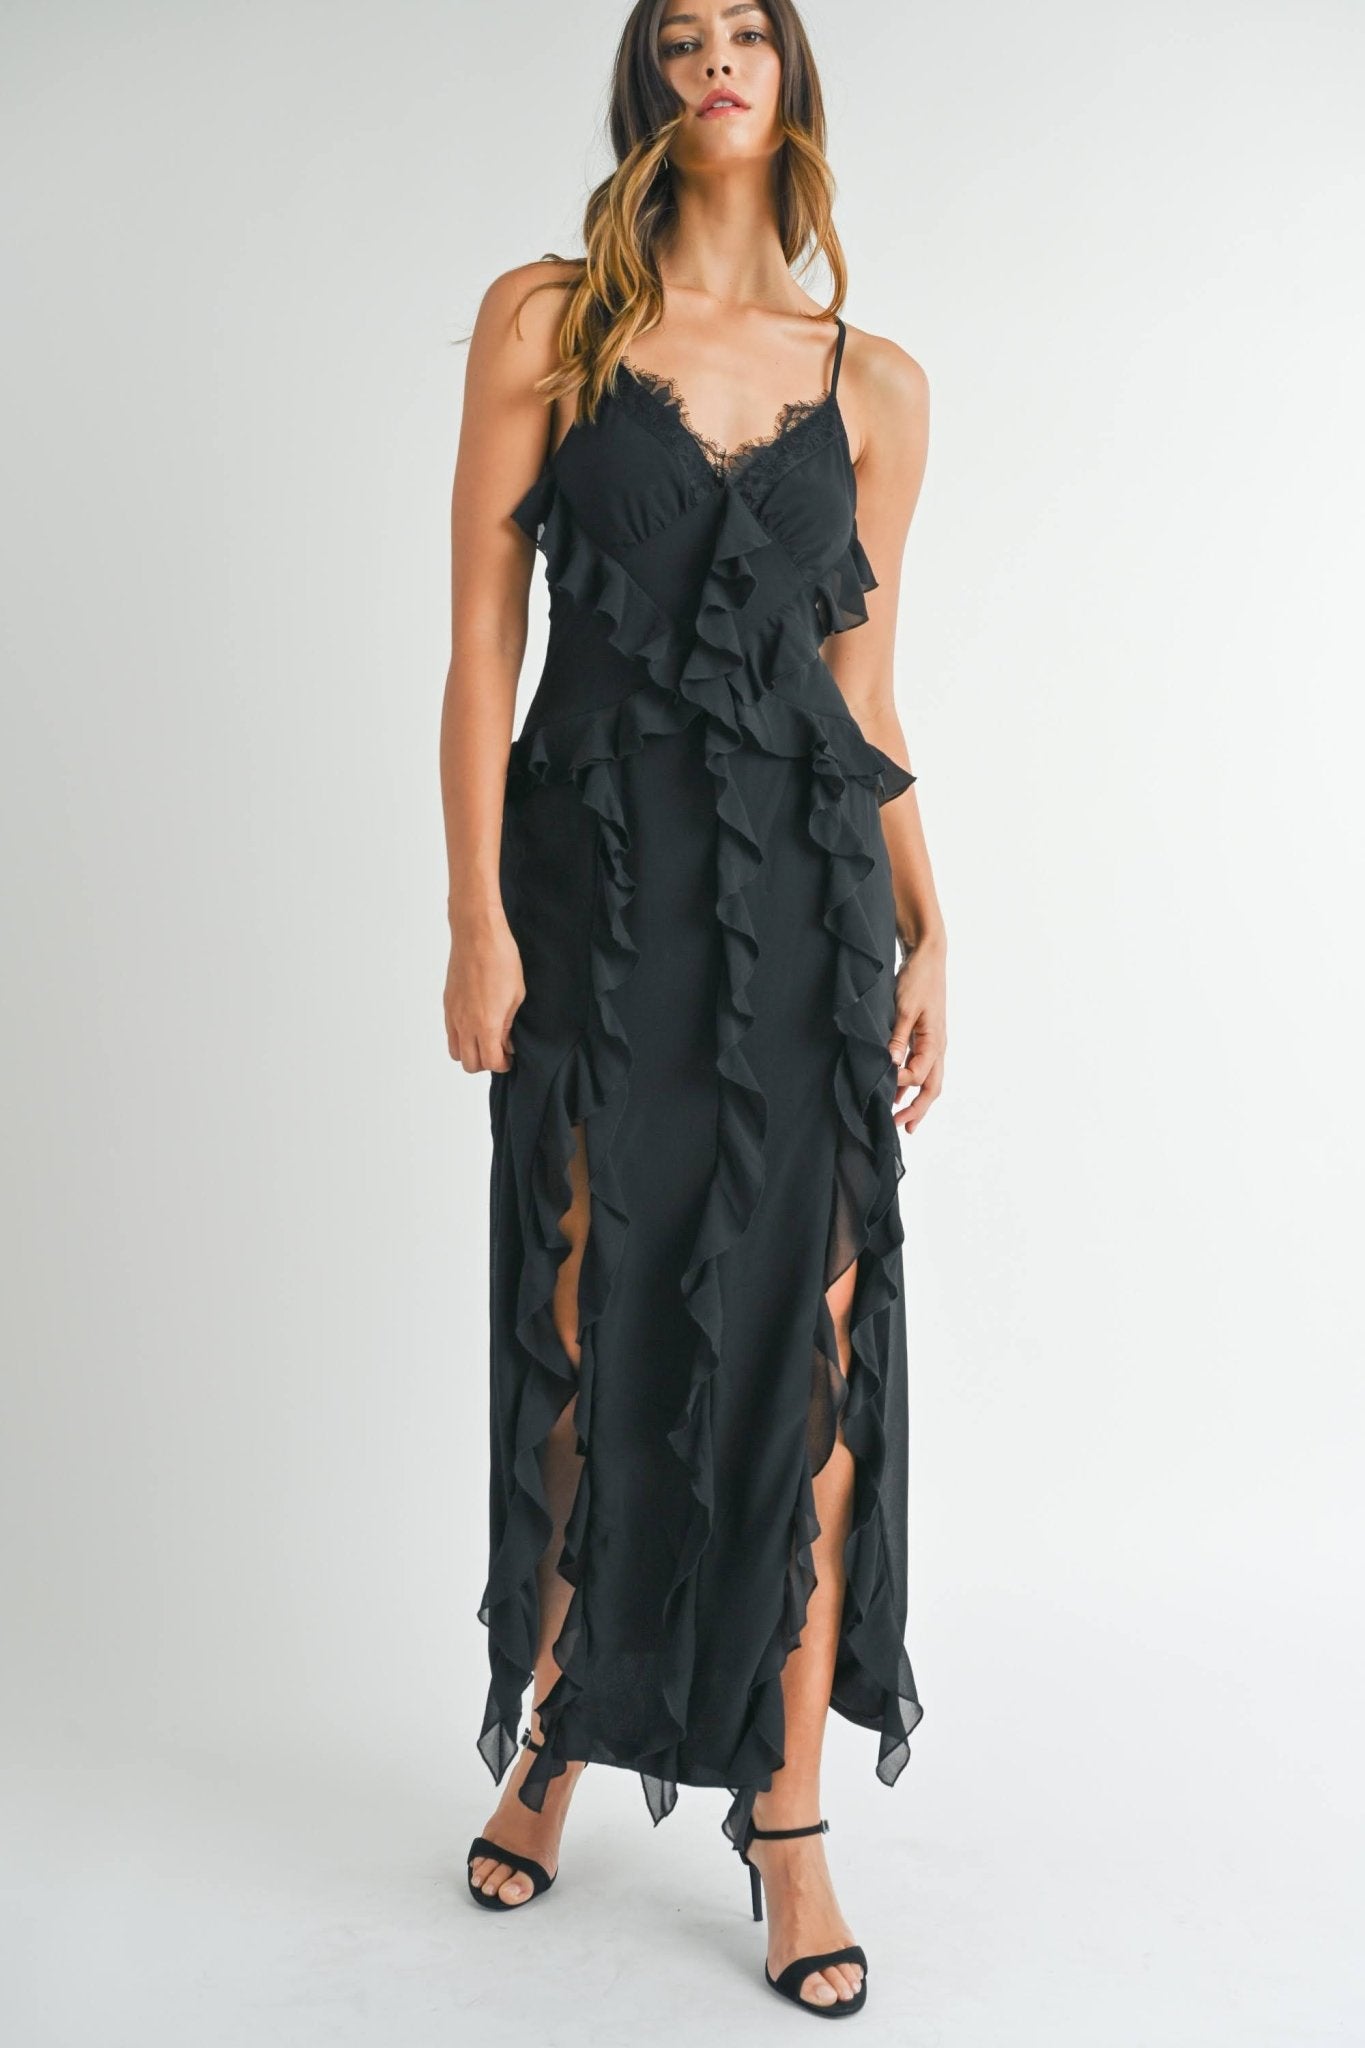 Aisha - negro - Cindel vestidos maxi, midi, mini, para toda ocasion, largos, de fiesta, de boda